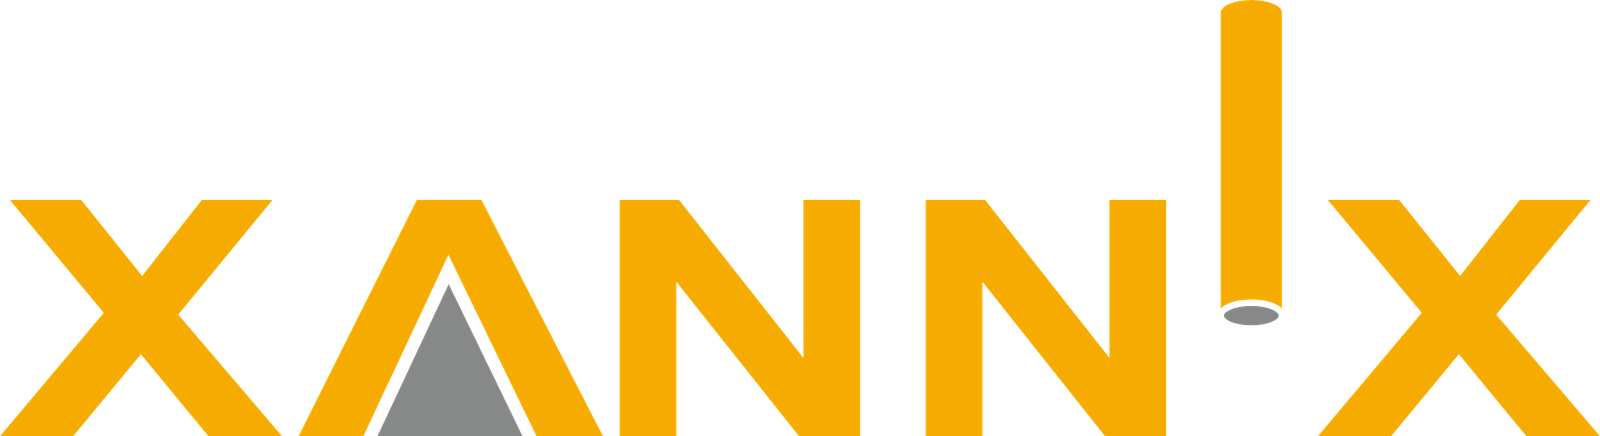 ~$xannix logo设计 确认稿b